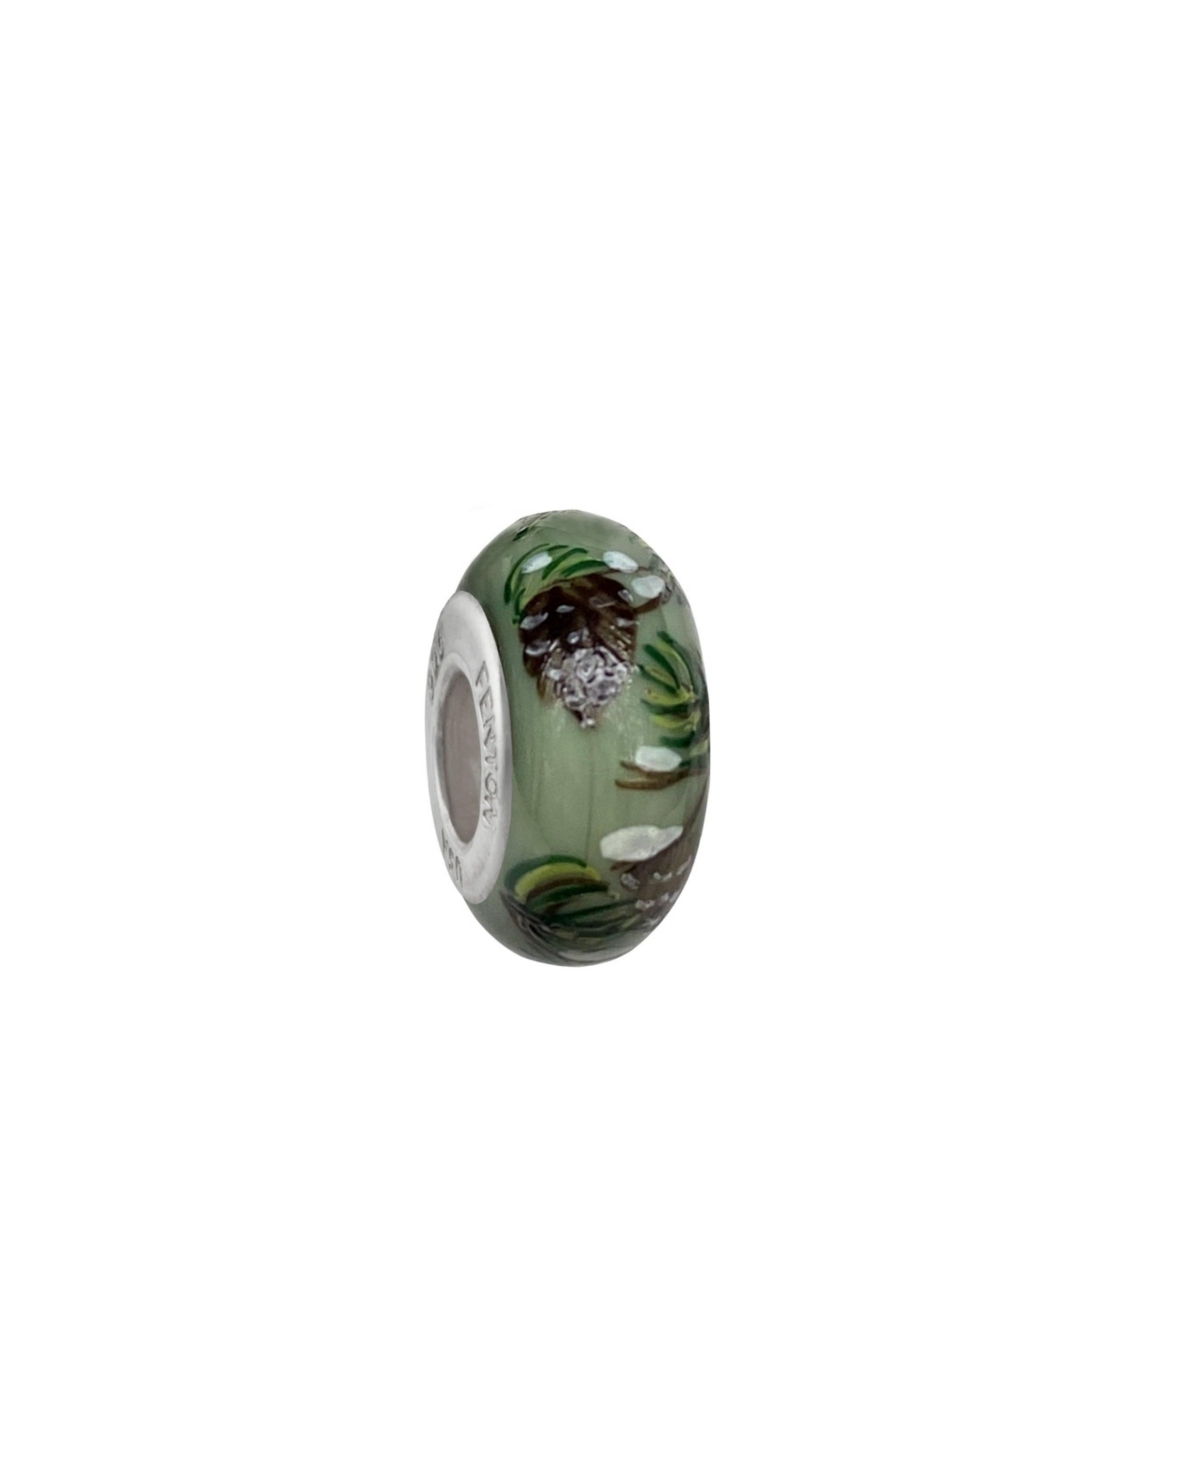 Glass Jewelry: Alpine Garland Glass Charm - Multi-color